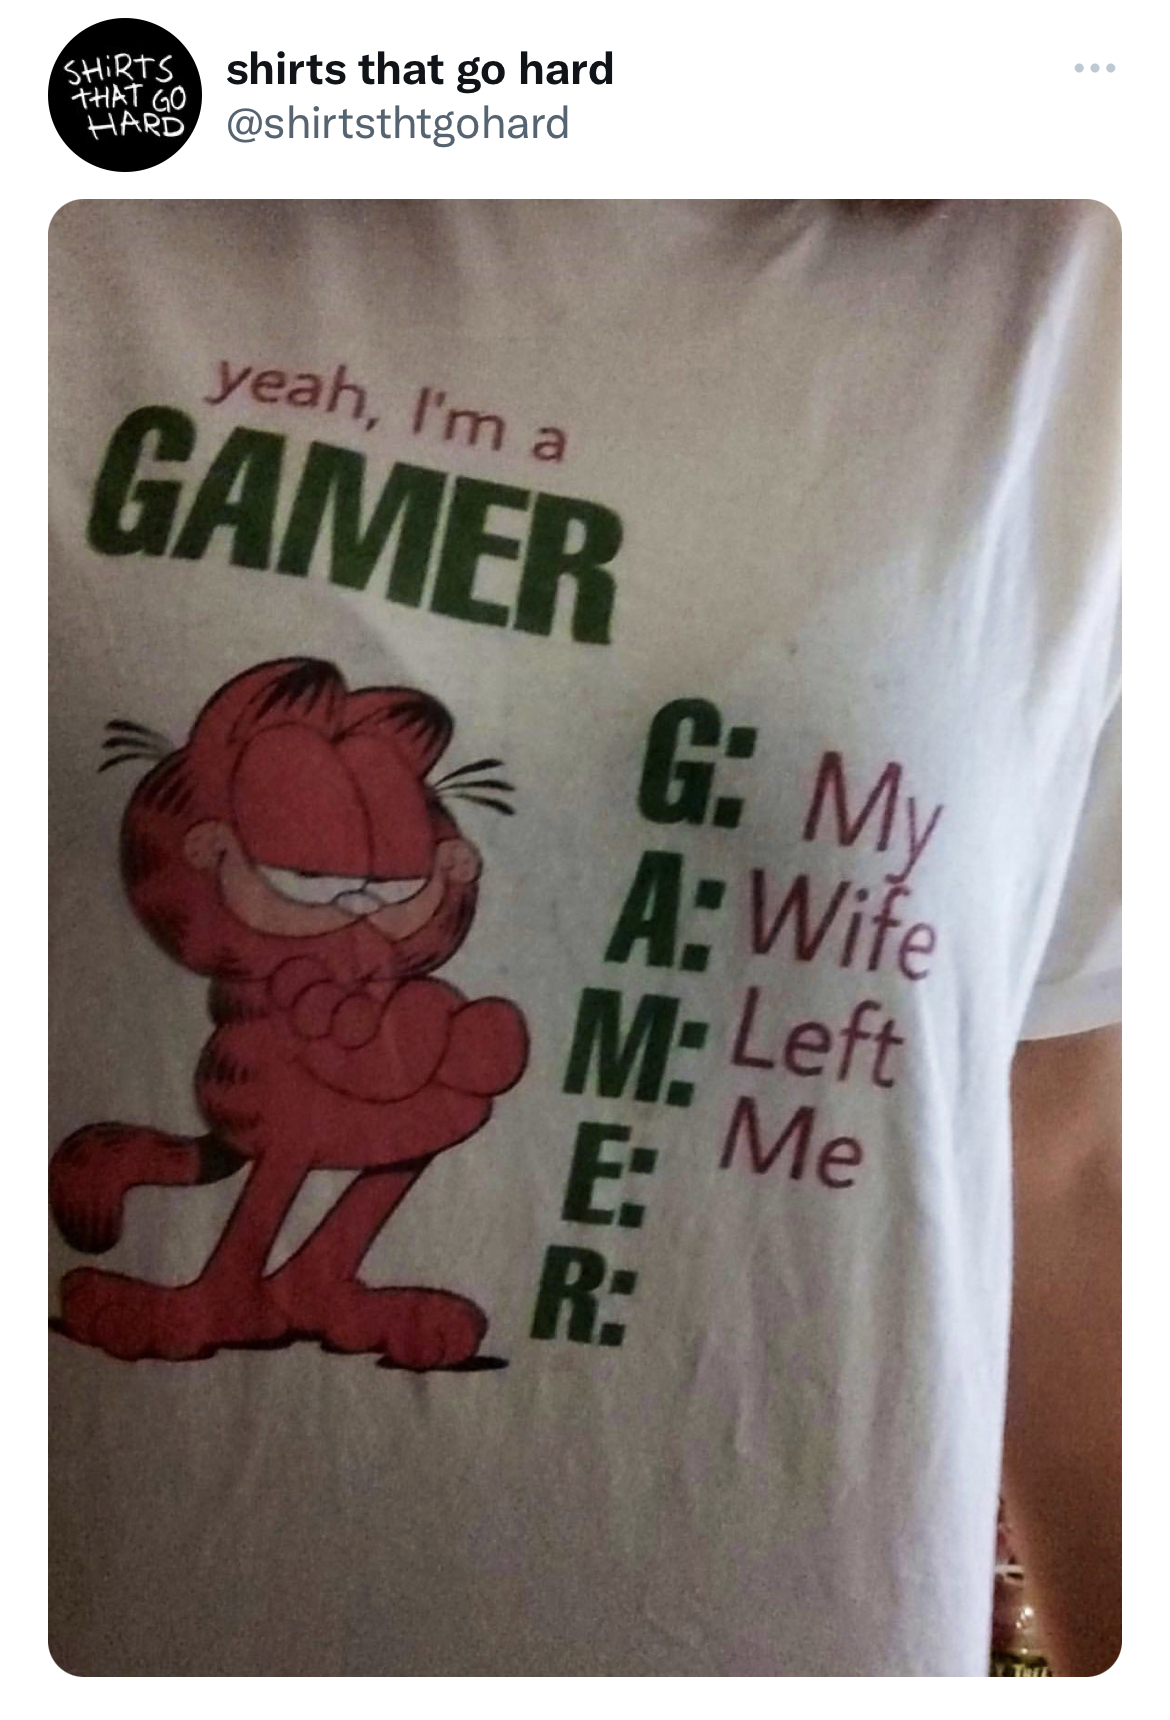 t shirt - Shirts shirts that go hard Hard That Go yeah, I'm a Gamer G. My A Wife MLeft Me E R